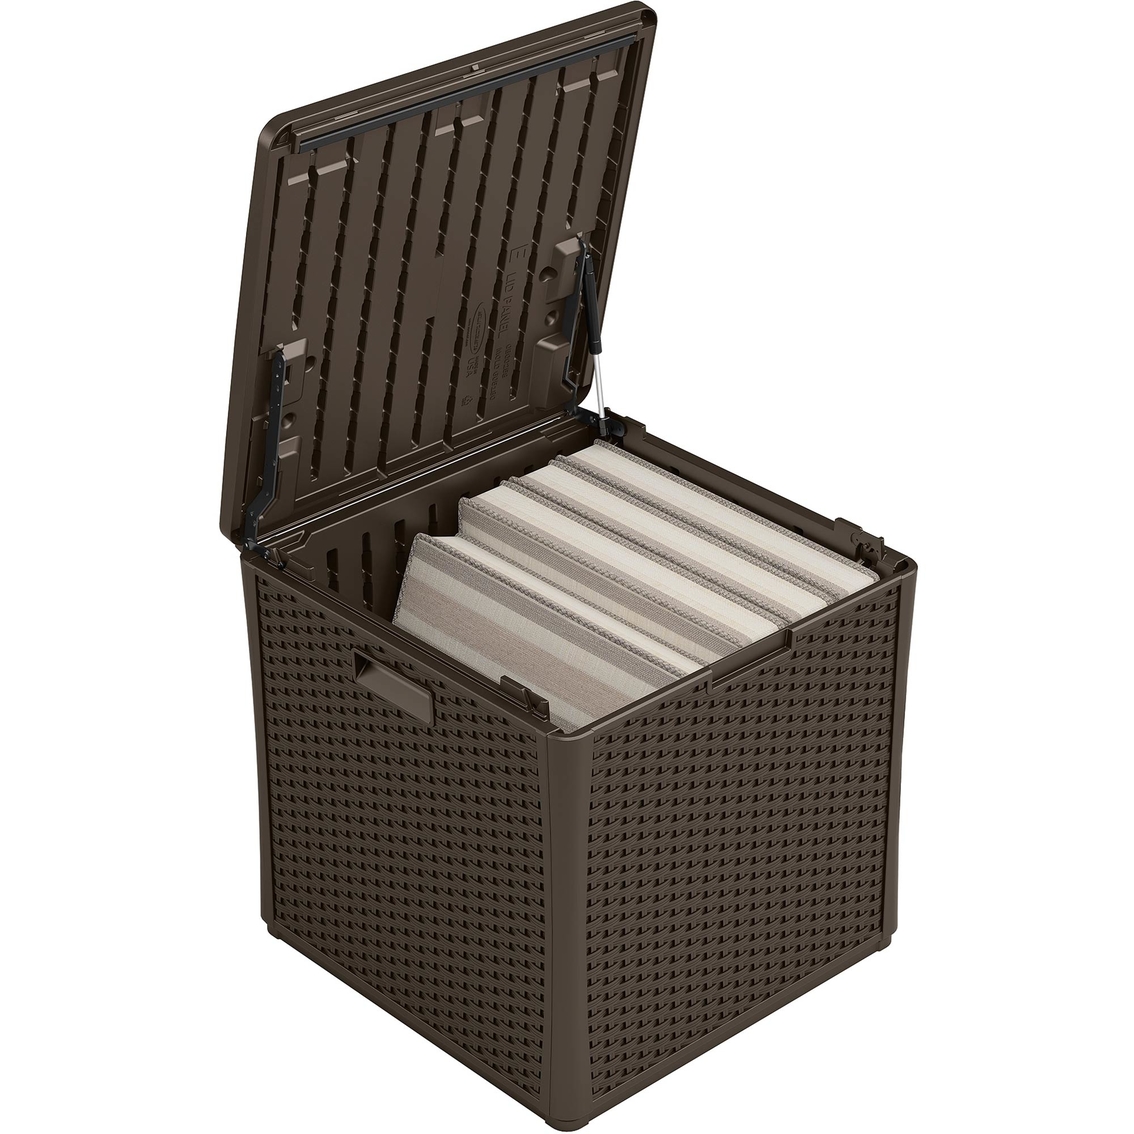 Suncast Wicker Storage Cube Deck Box - Image 2 of 4